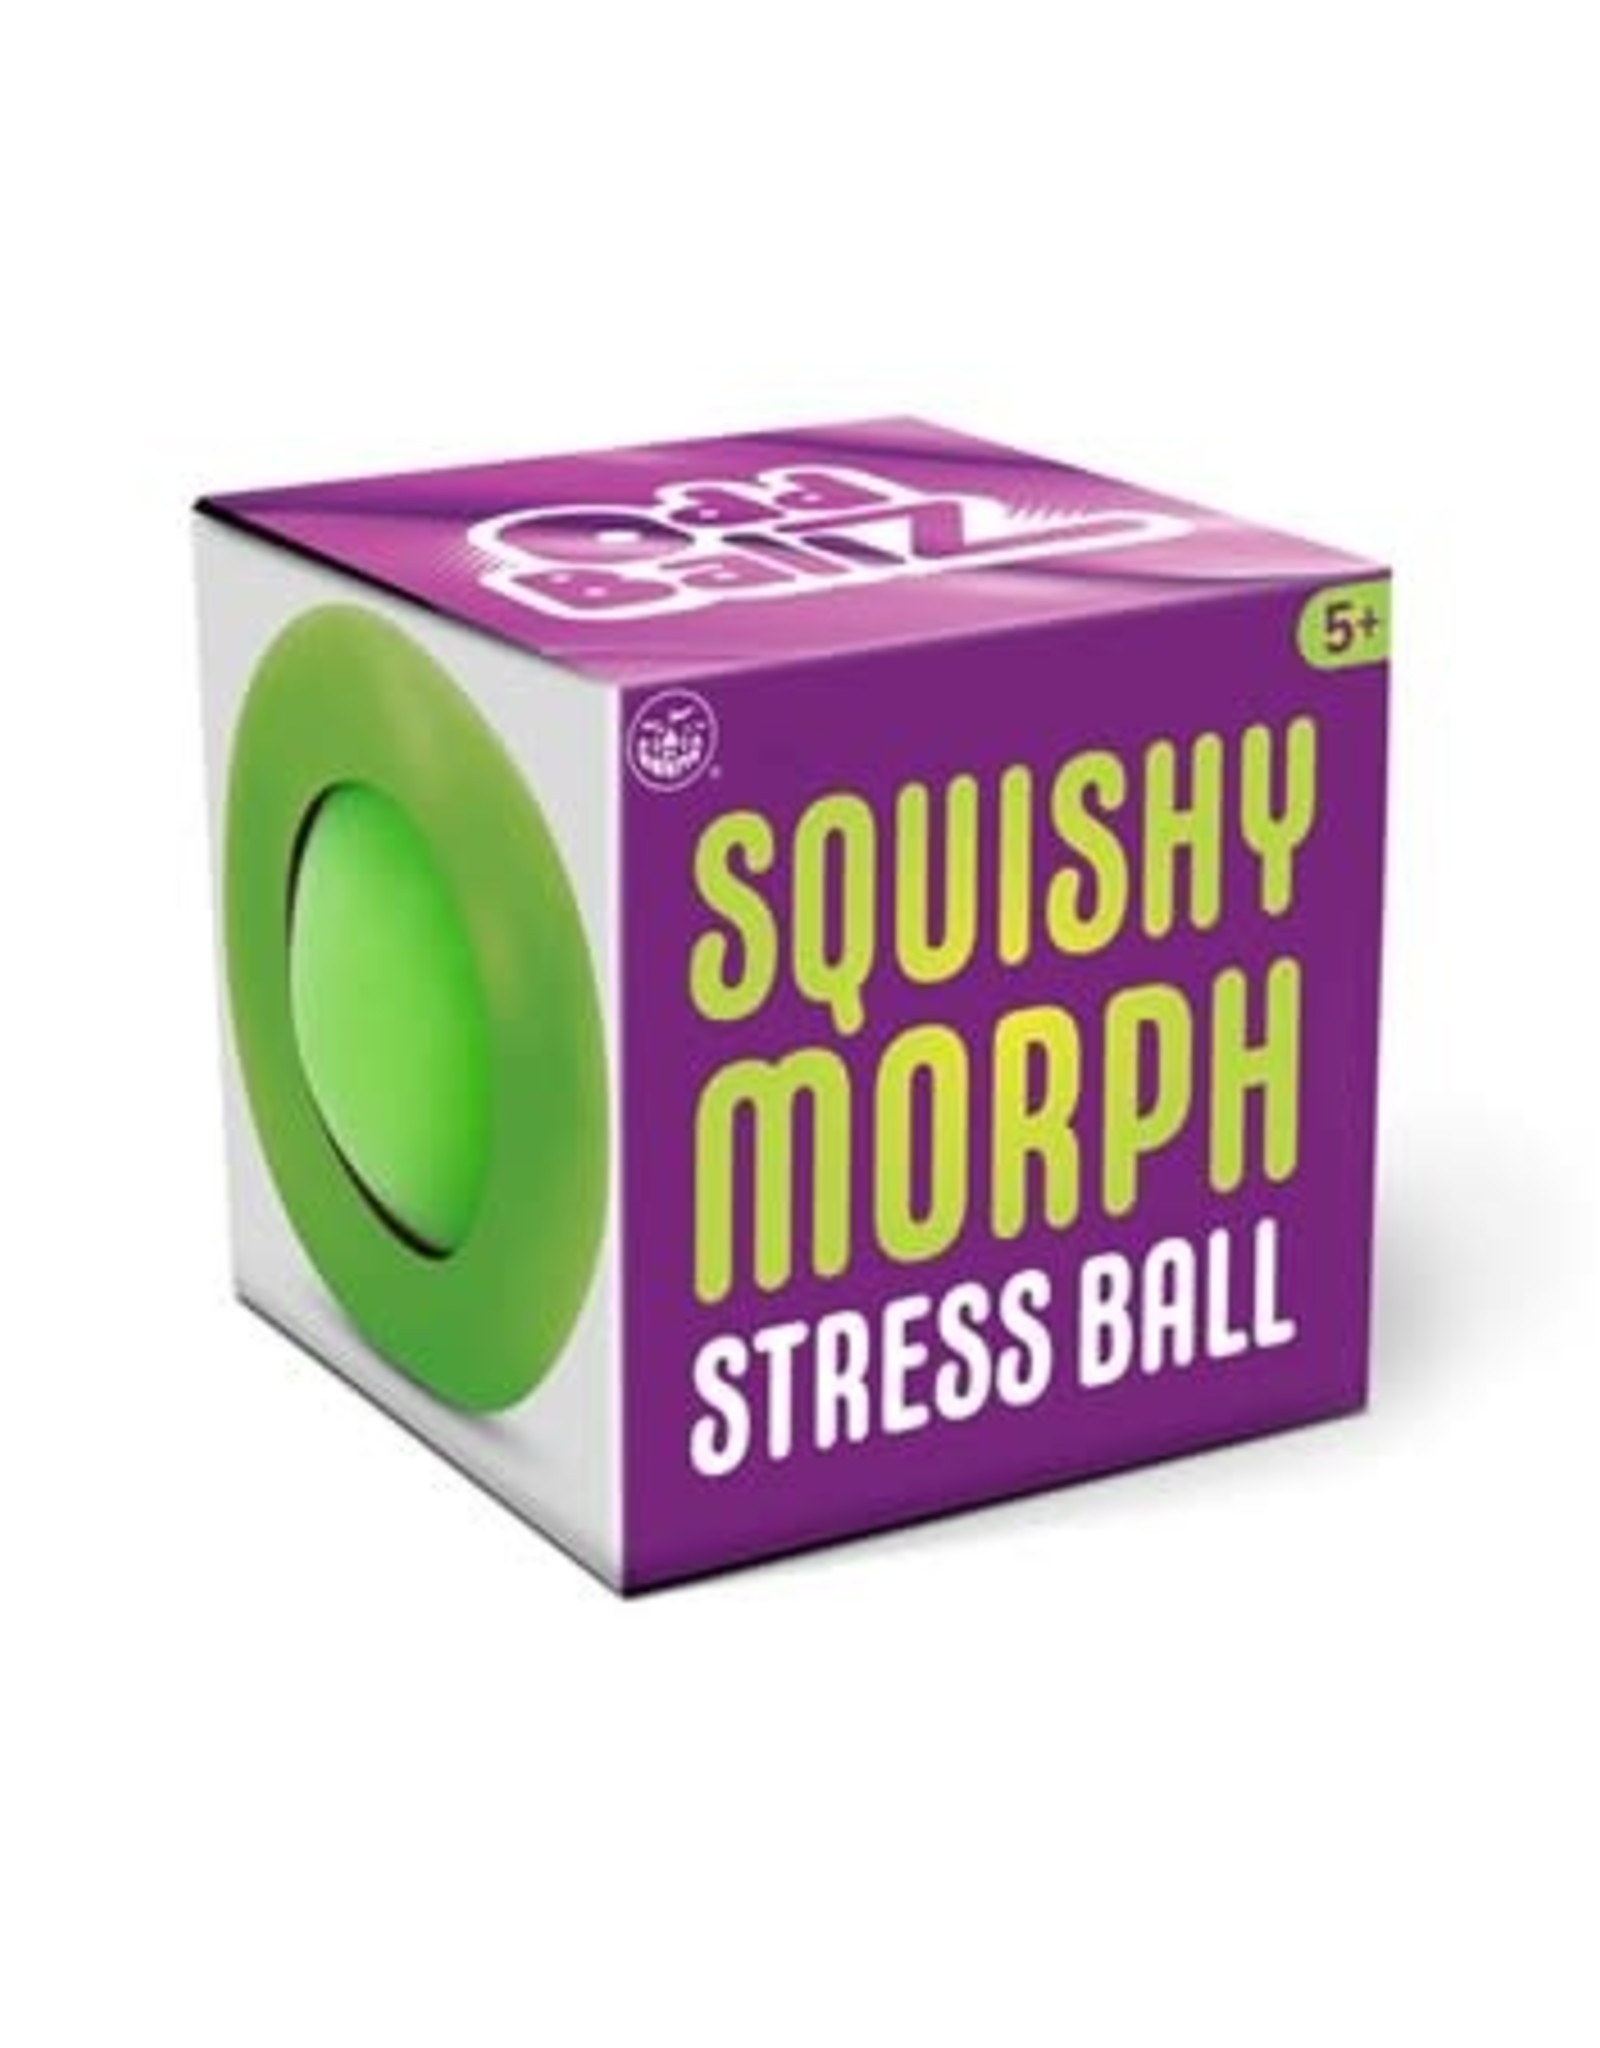 Playvisions Squishy Morph Ball